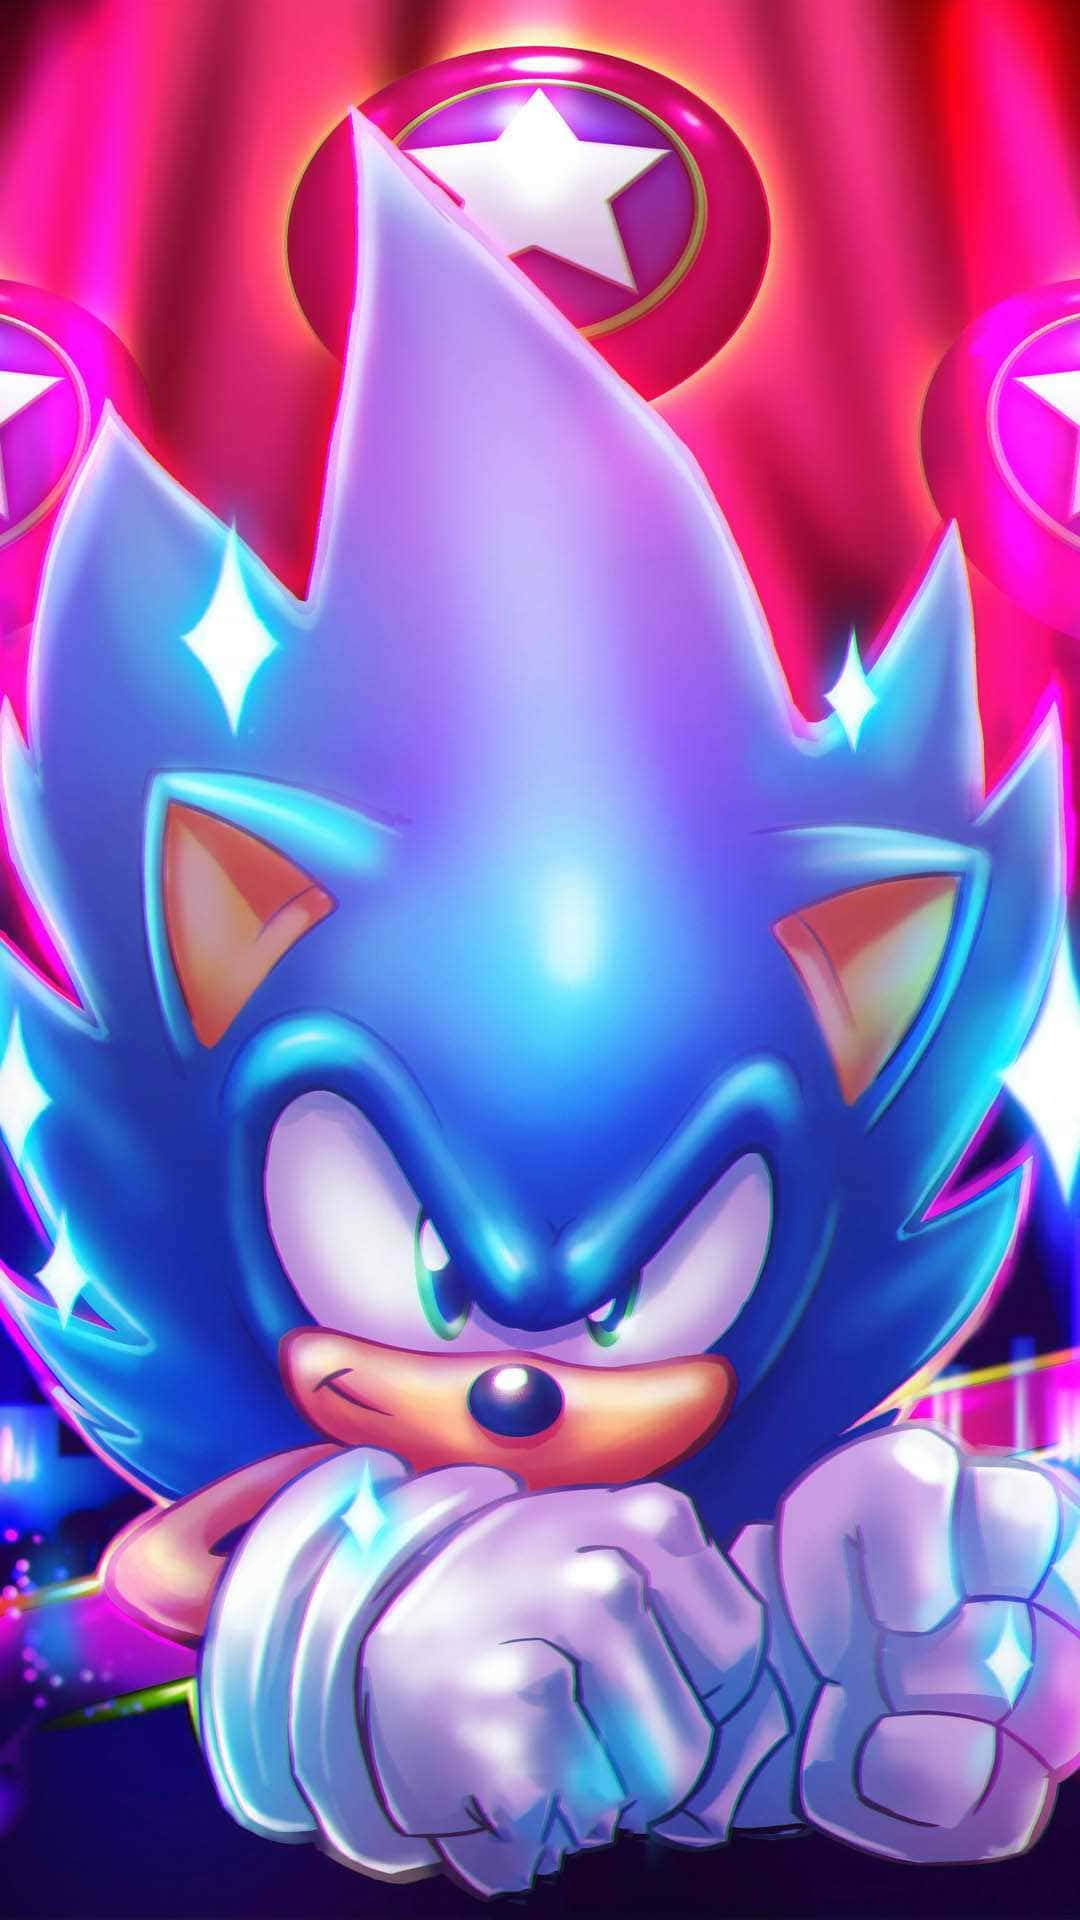 Sonicthe Hedgehog Bakgrundsbild. Wallpaper